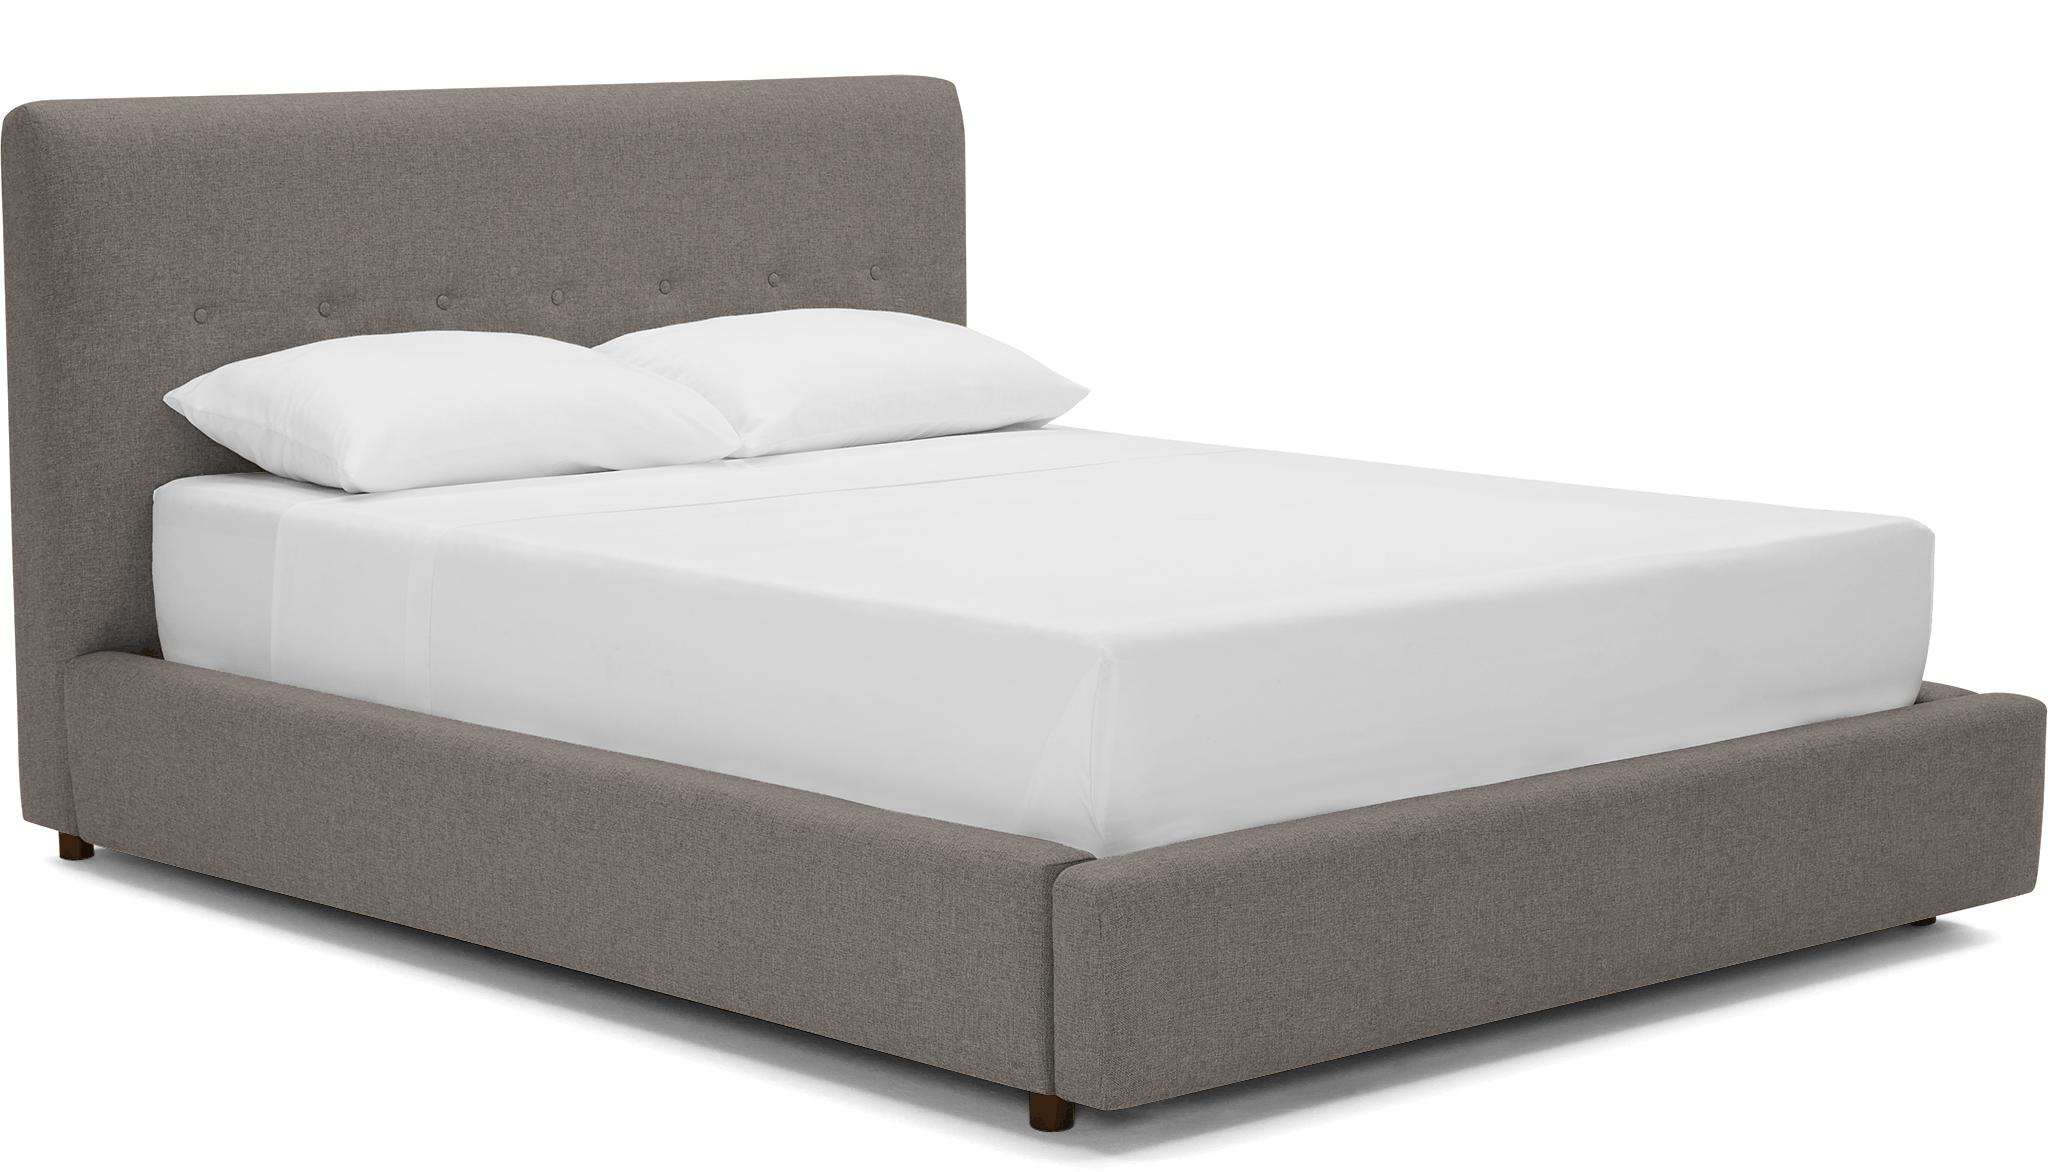 Gray Alvin Mid Century Modern Storage Bed - Cody Slate - Mocha - Queen - Image 1